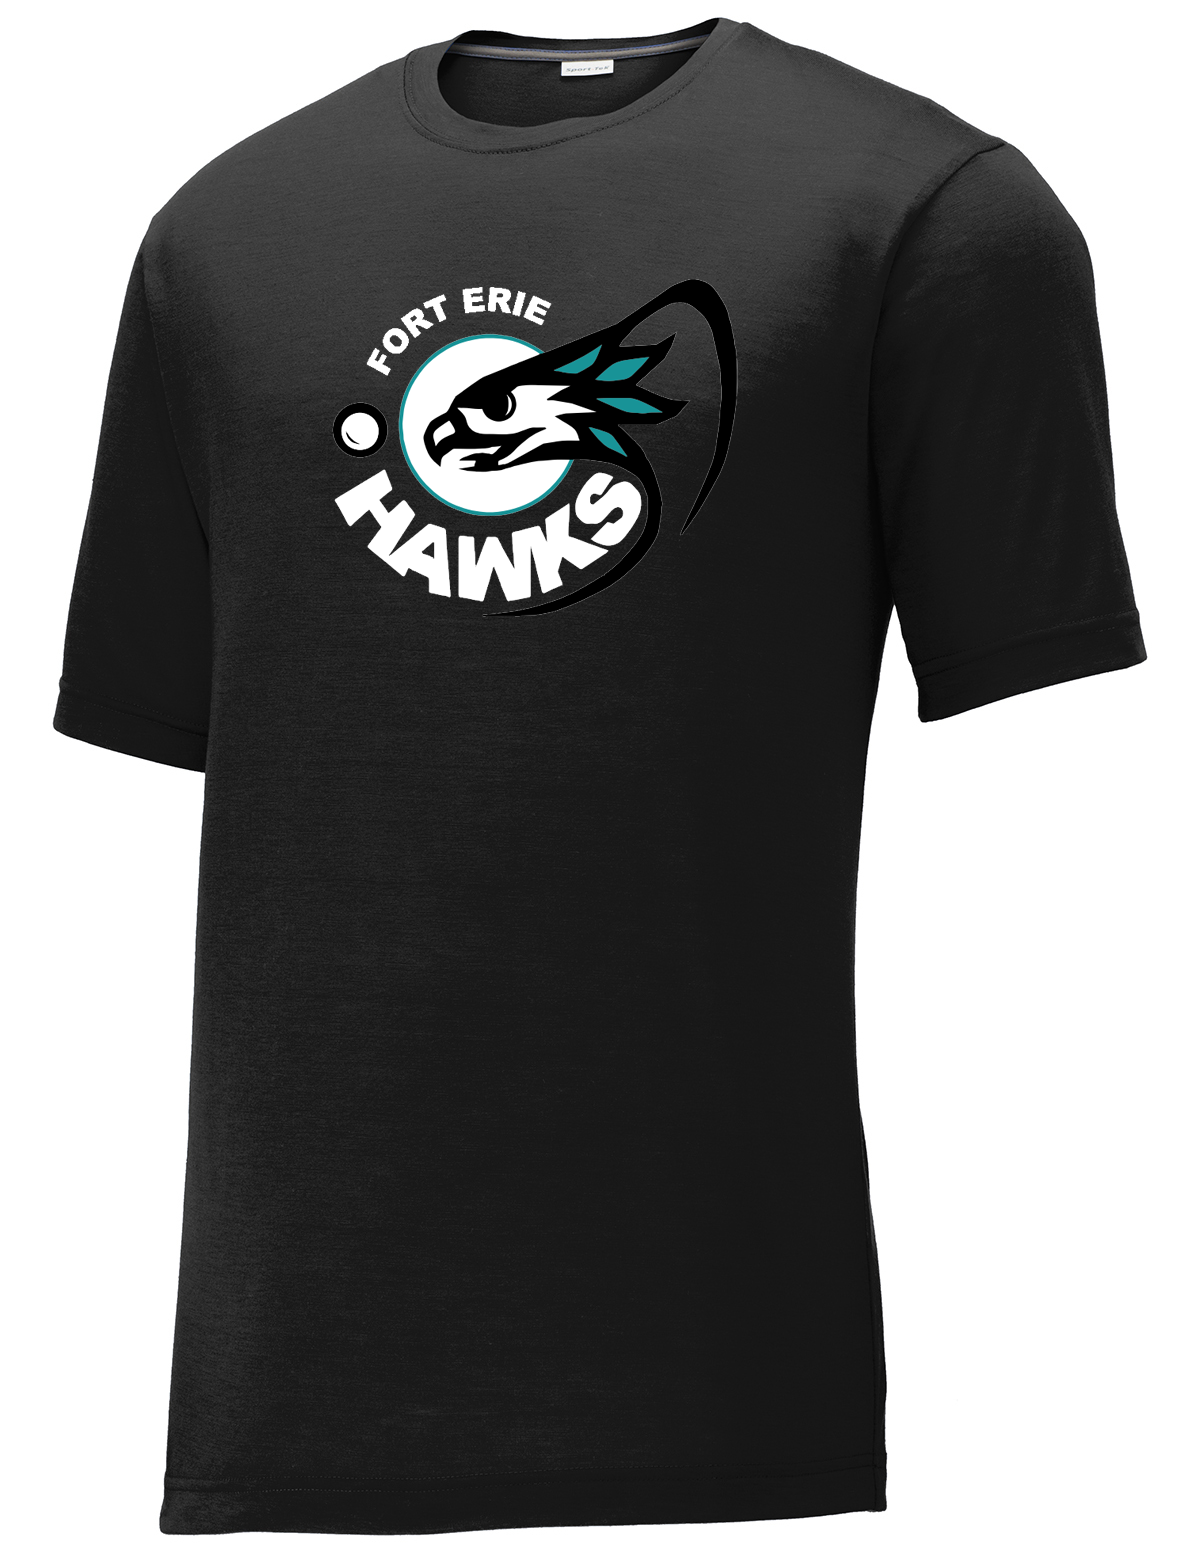 Fort Erie Hawks Black CottonTouch Performance T-Shirt